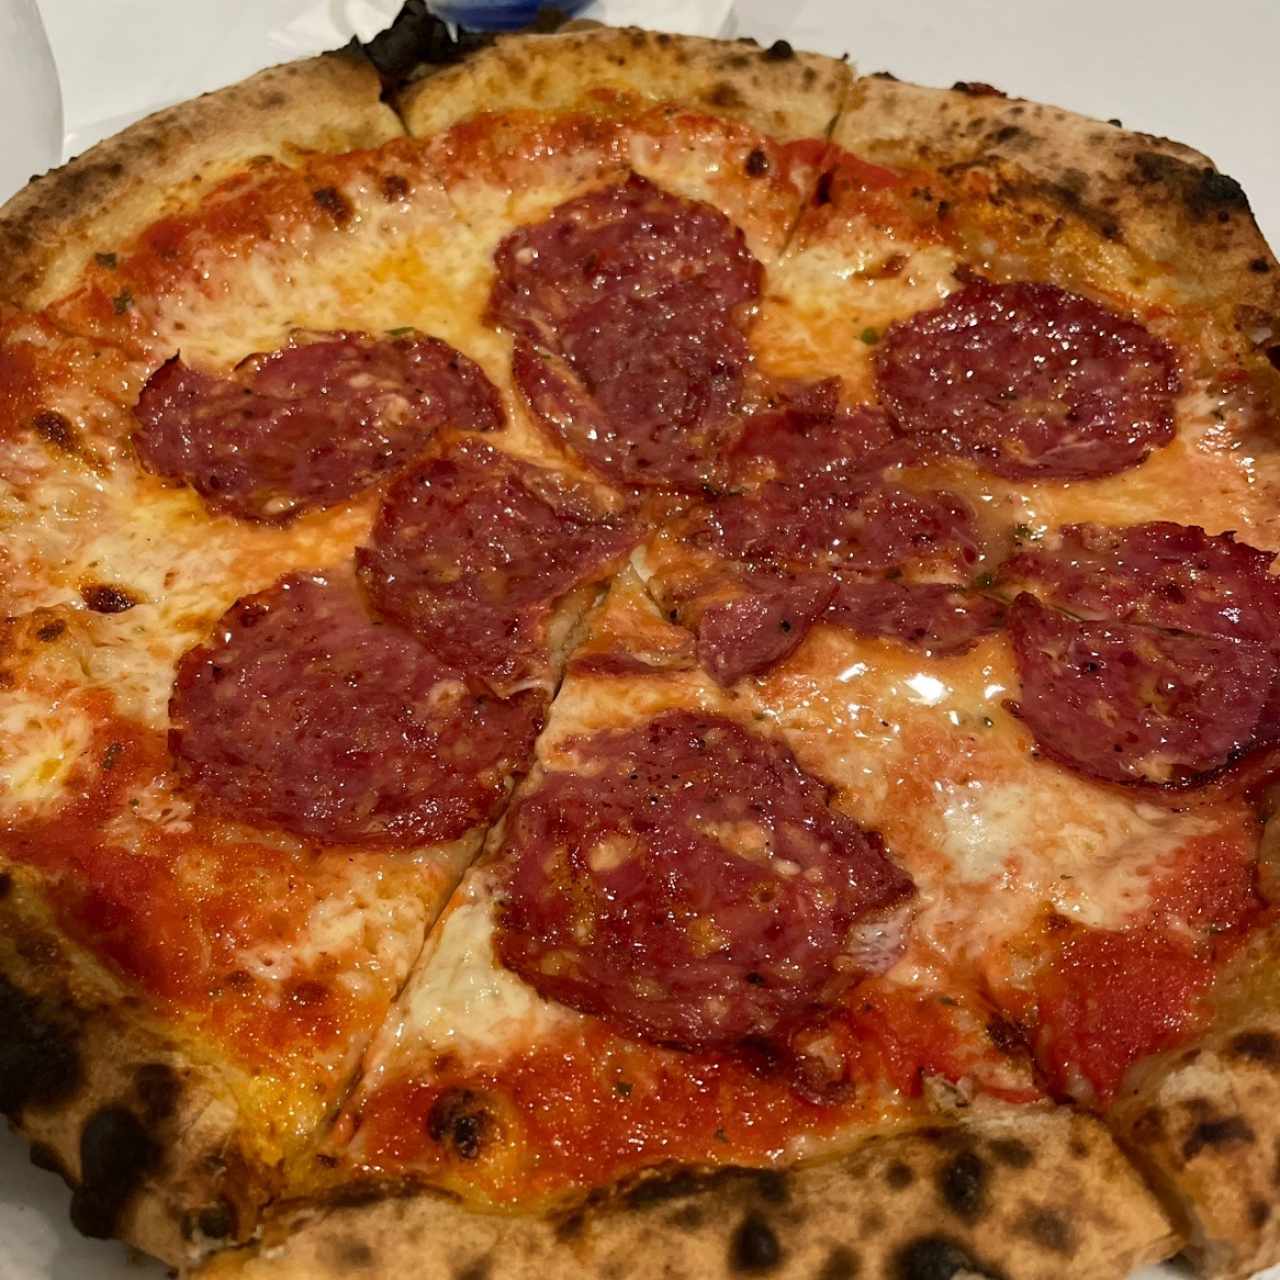 Pizza - Salame